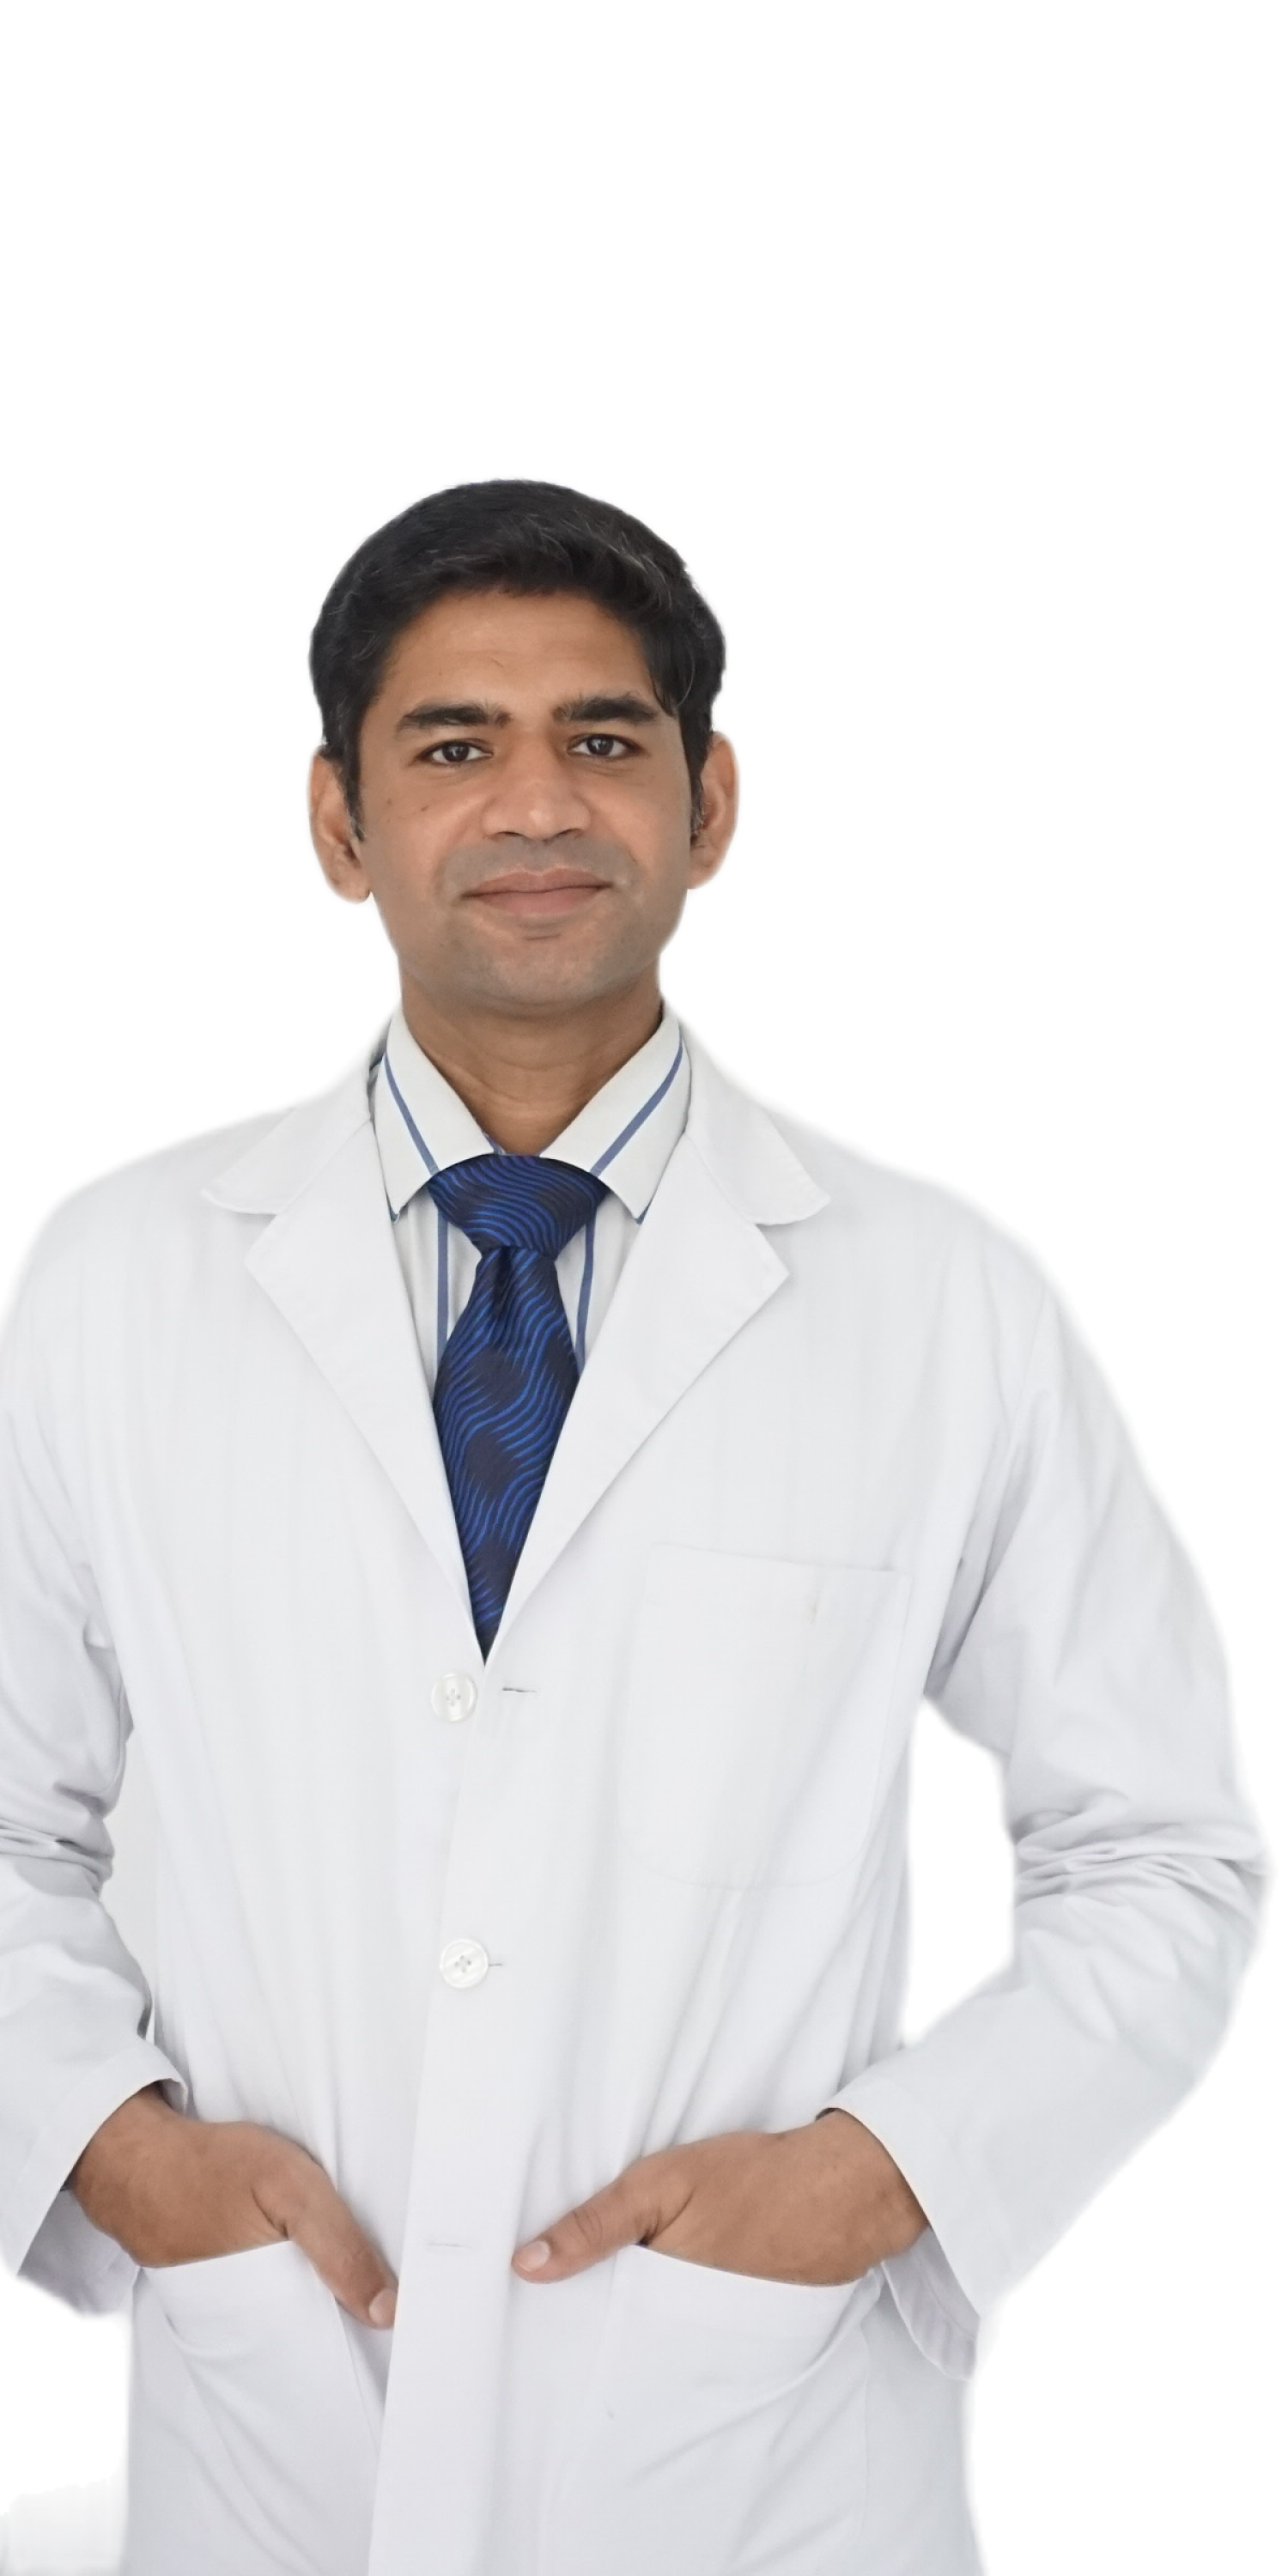 Dr Kaushal Yadav Surgical Oncologist Cancer Surgeon in Gurgaon, Haryana, Delhi NCR, India